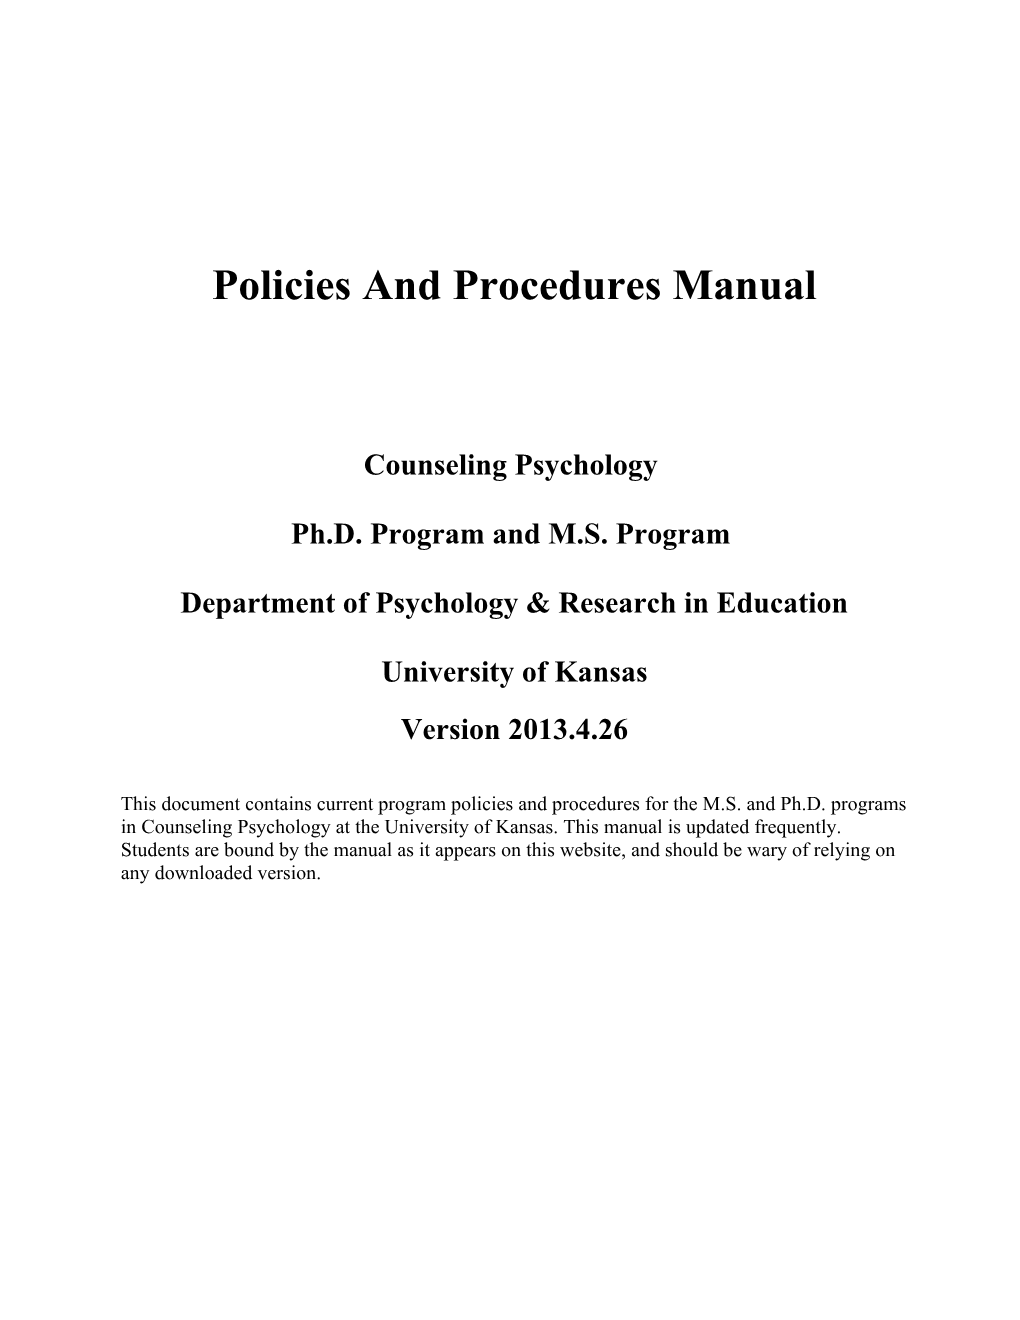 Policies and Procedures Manual s1